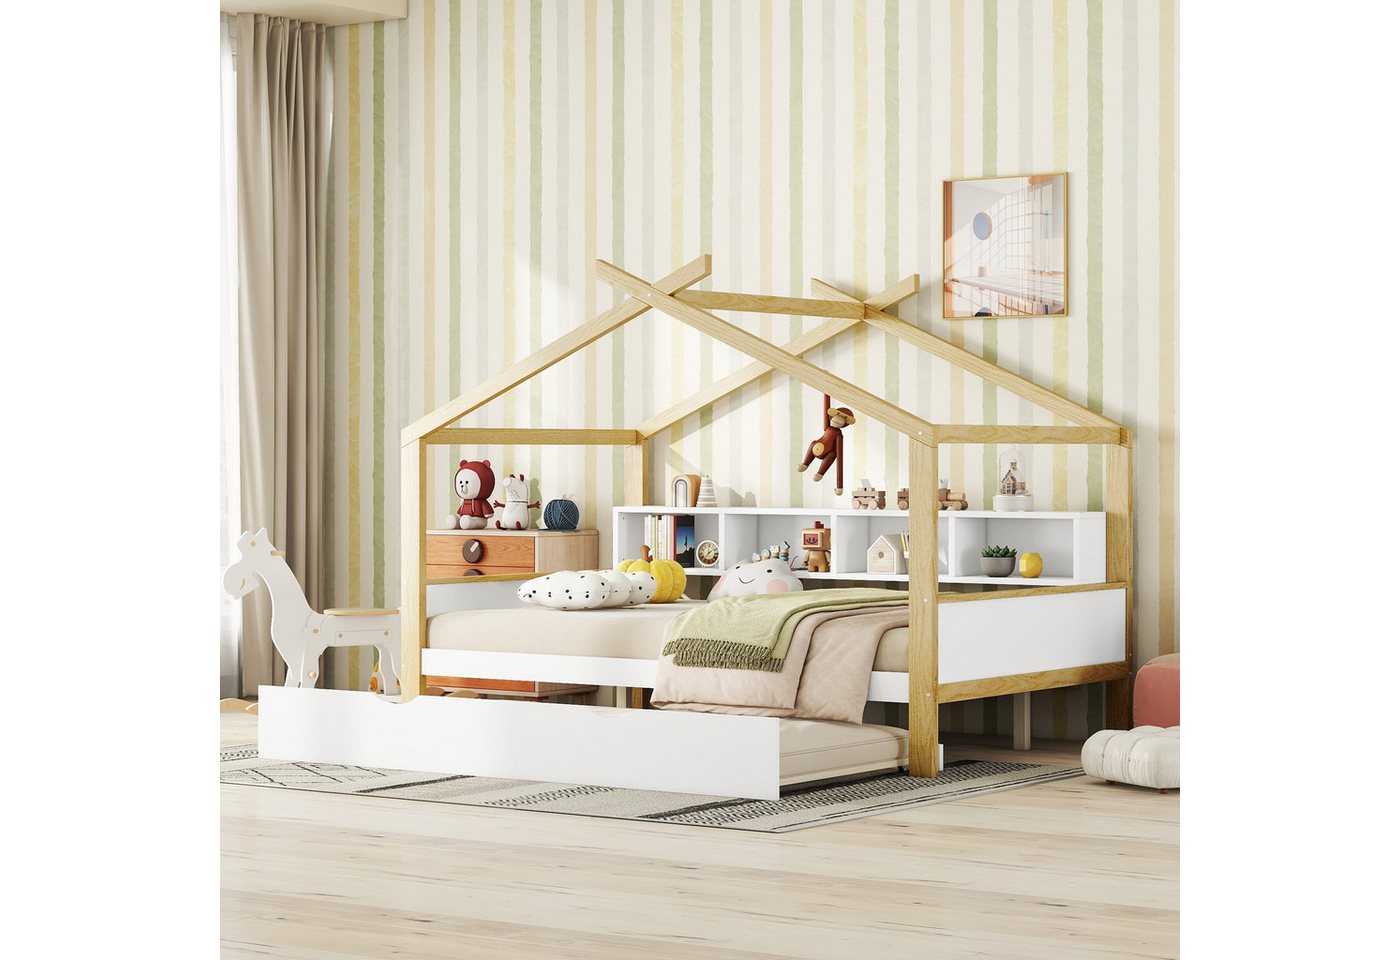 Odikalo Kinderbett Holzbett Jugendbett Dachform Ausziehbar 4 Staufächern 140x200cm weiß von Odikalo